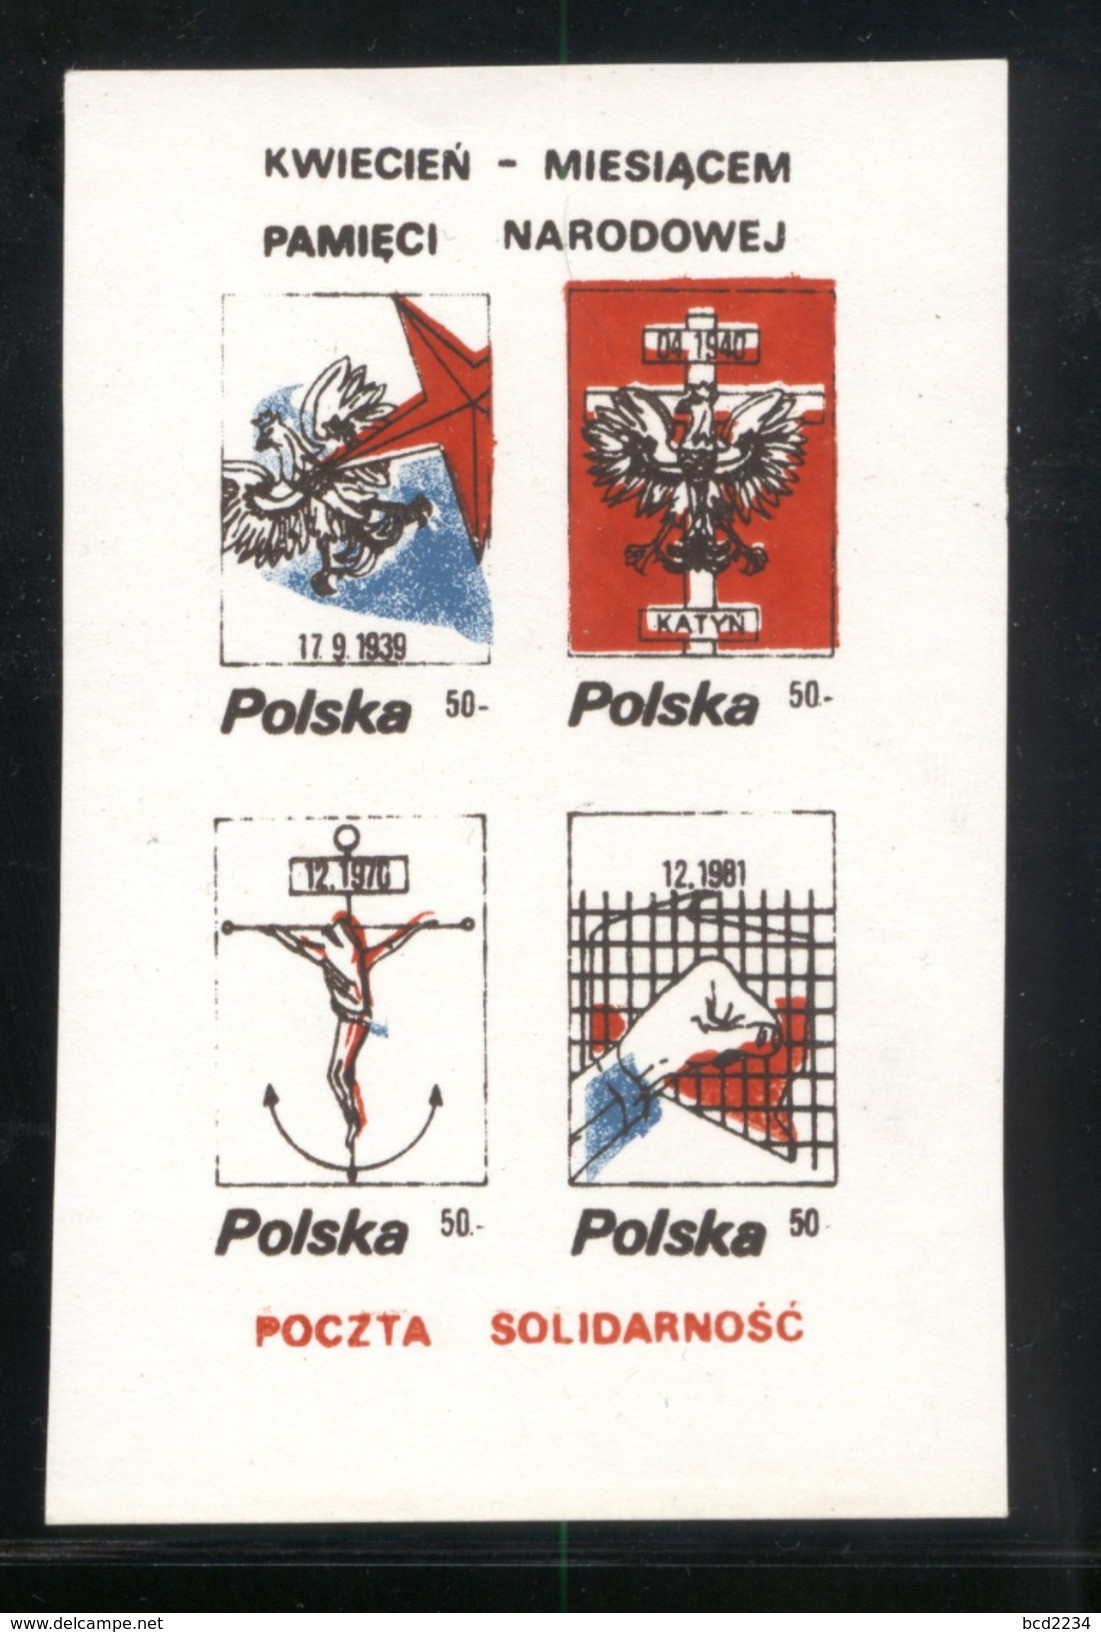 POLAND SOLIDARNOSC SOLIDARITY (POCZTA SOLIDARNOSC) APRIL NATIONAL MONTH OF REMEMBRANCE MS KATYN WW2 WORLD WAR 2 - Vignettes Solidarnosc